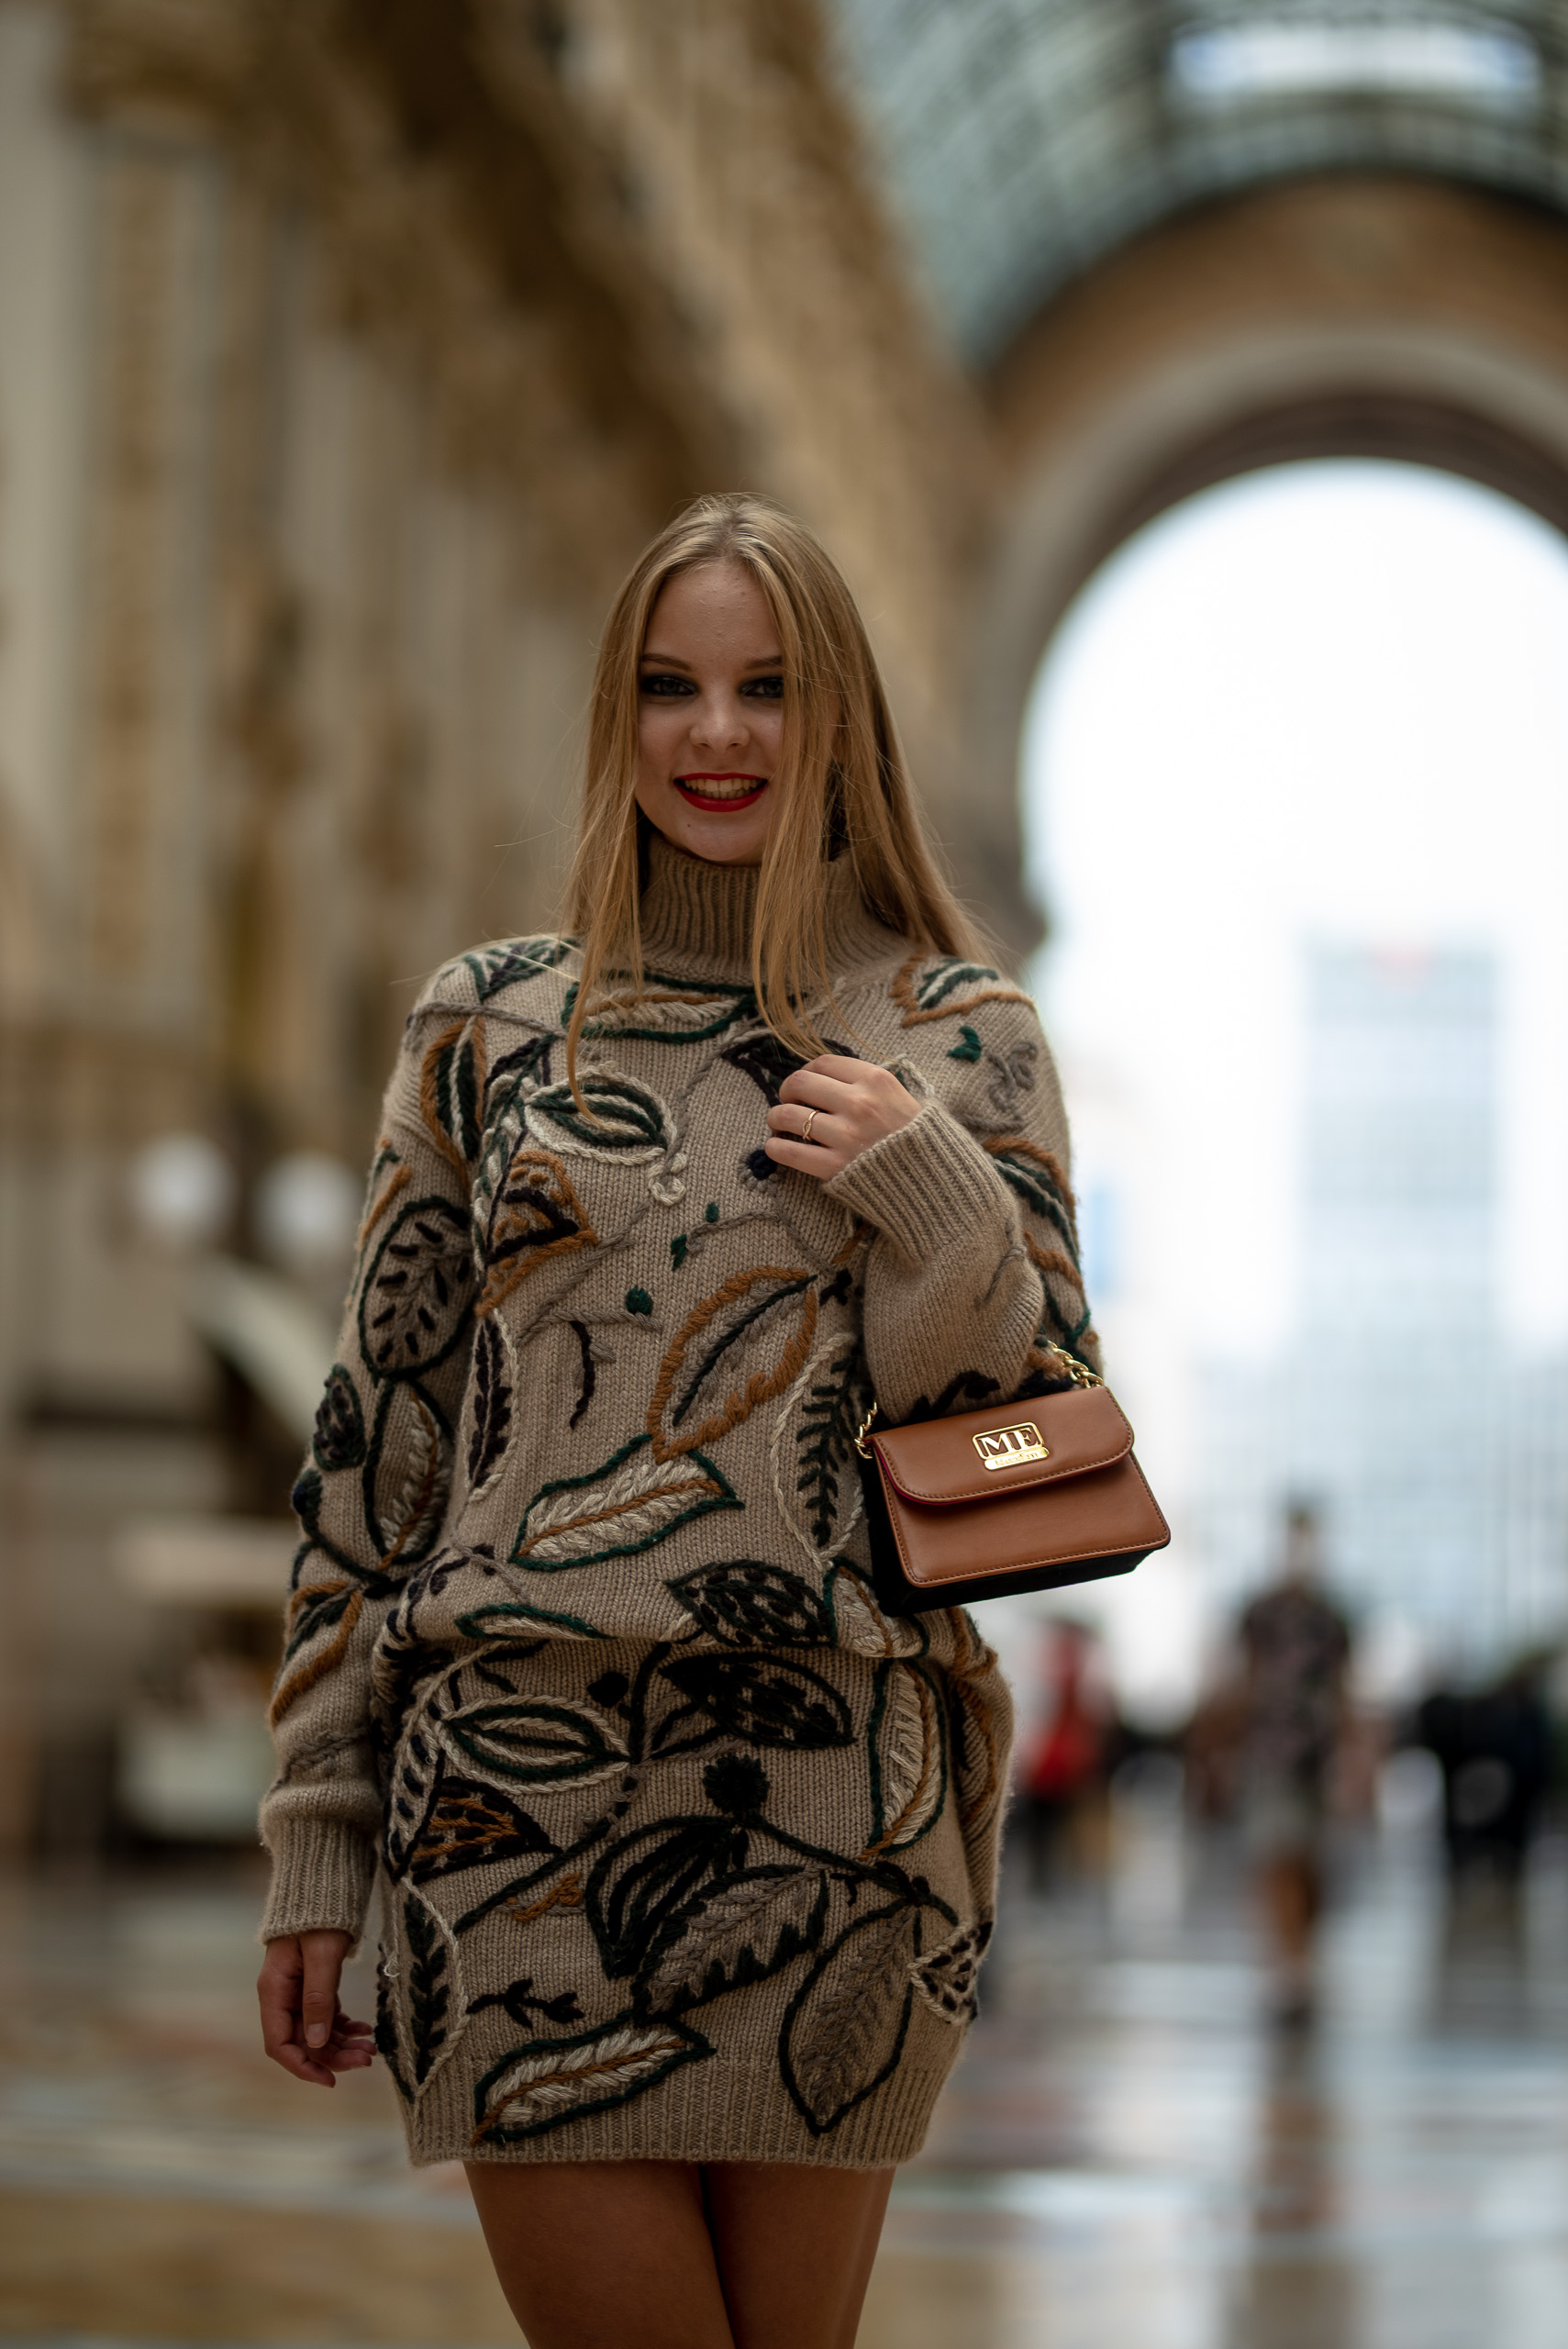 Marosetti Borse con la testimonial Elisa Caterina Egger alla Milano Fashion Week 2020 (3)